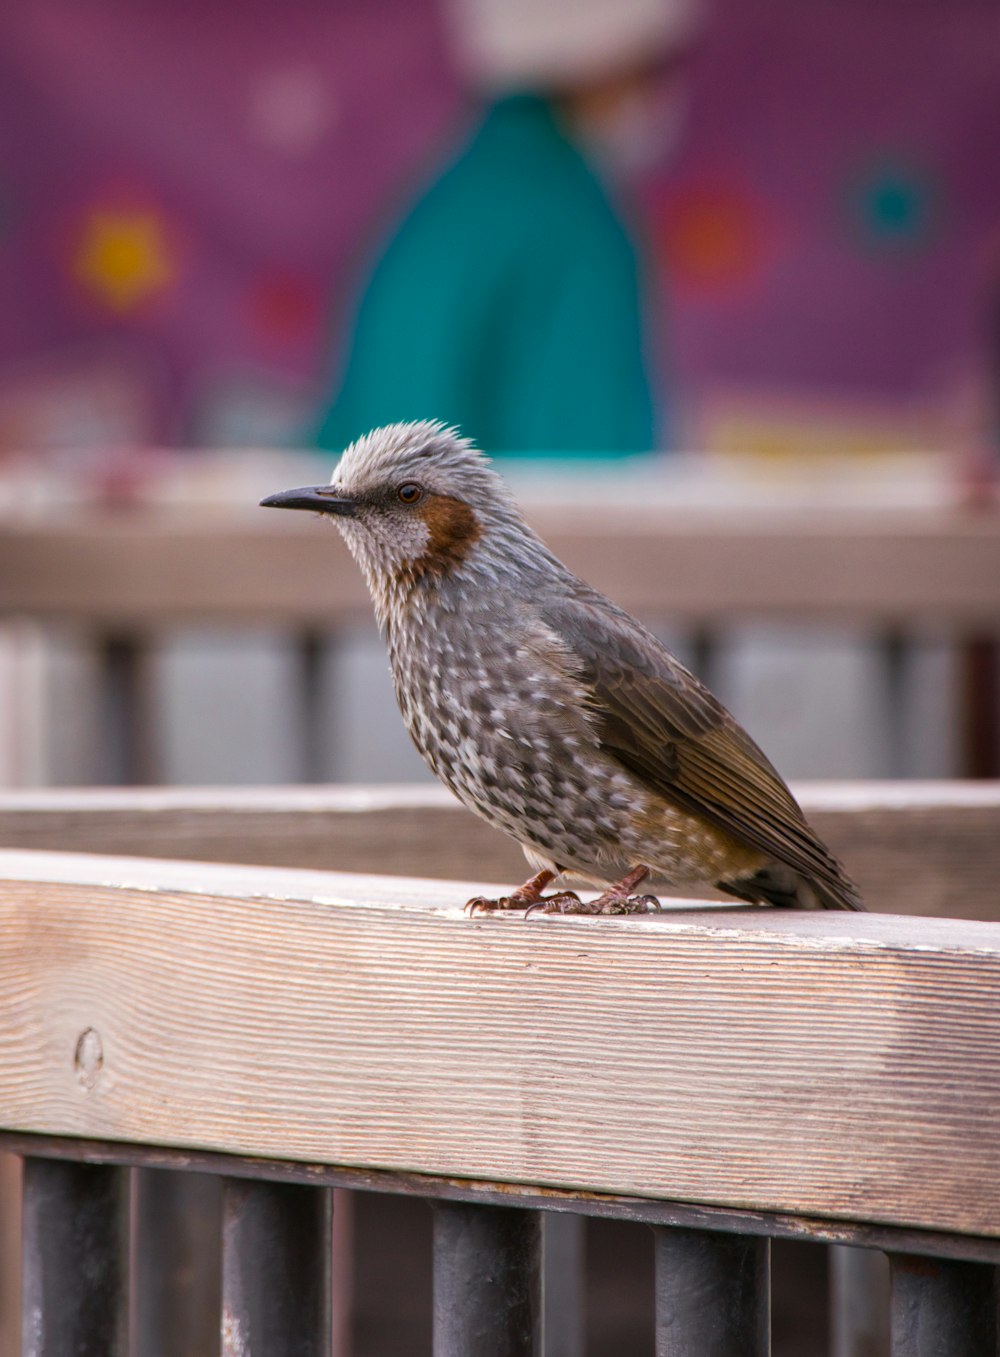 a bird sitting on a bench